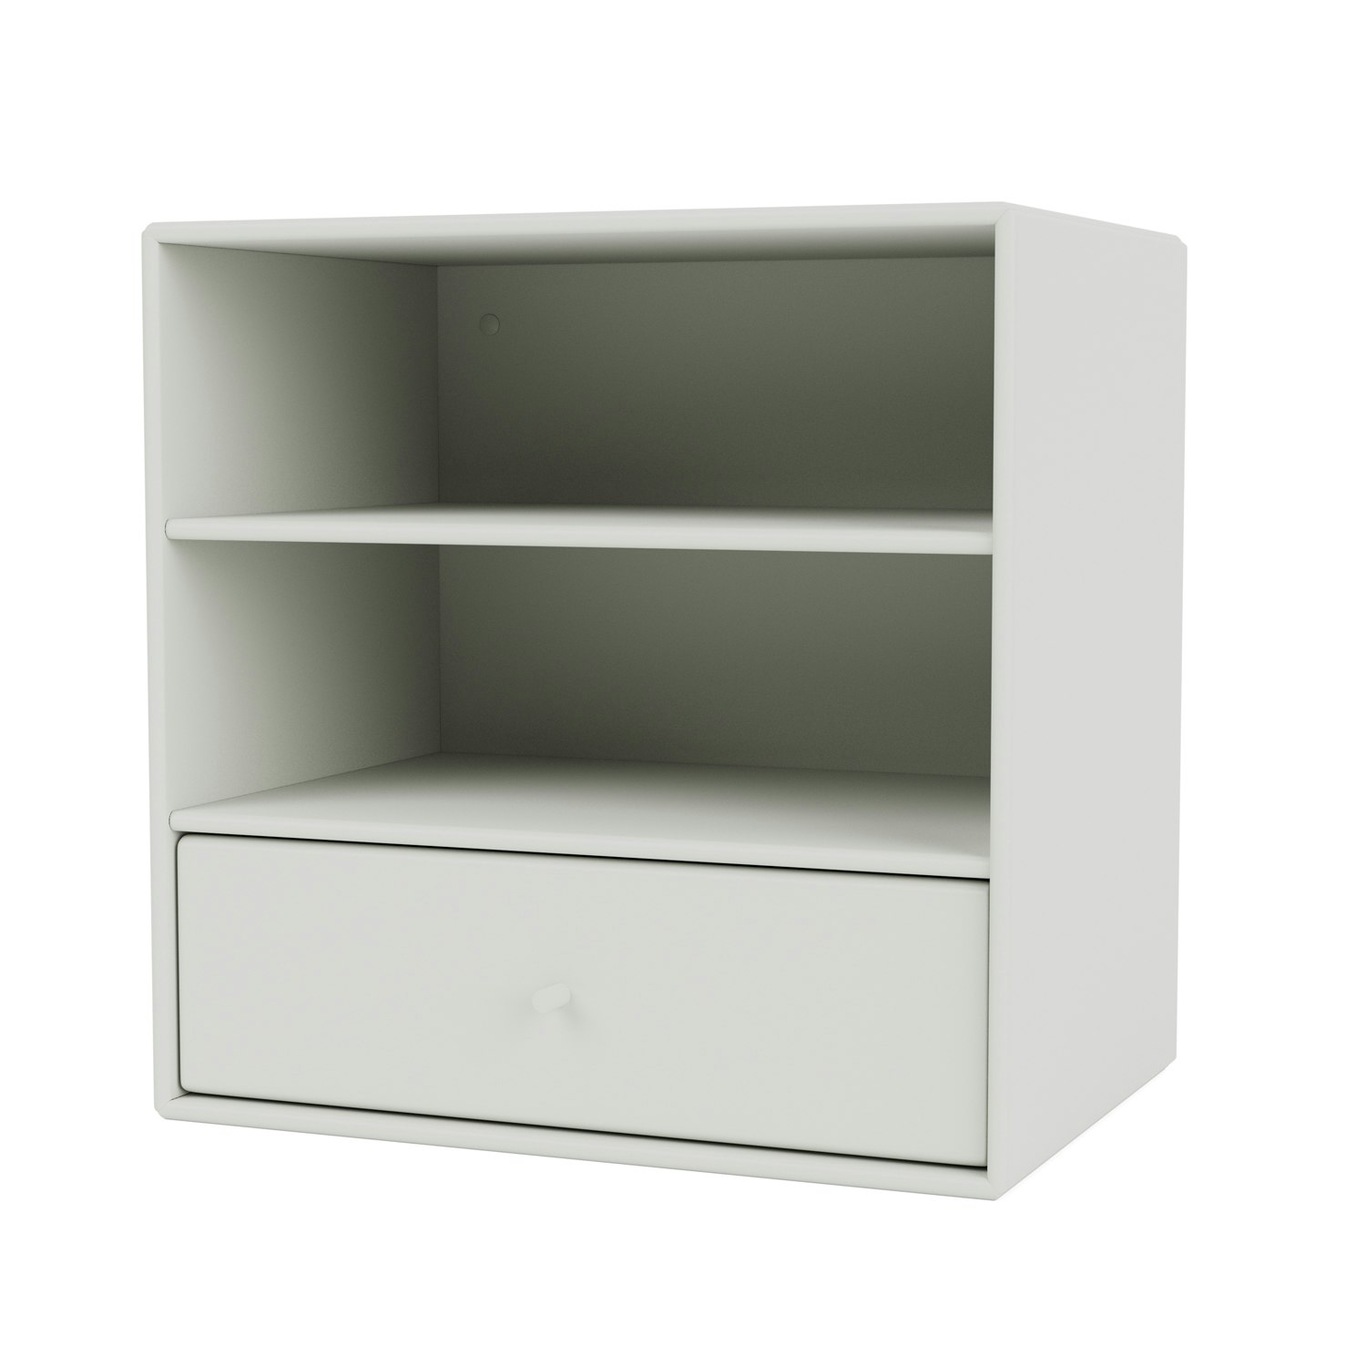 Mini 1005 Shelf With One Drawer, Nordic